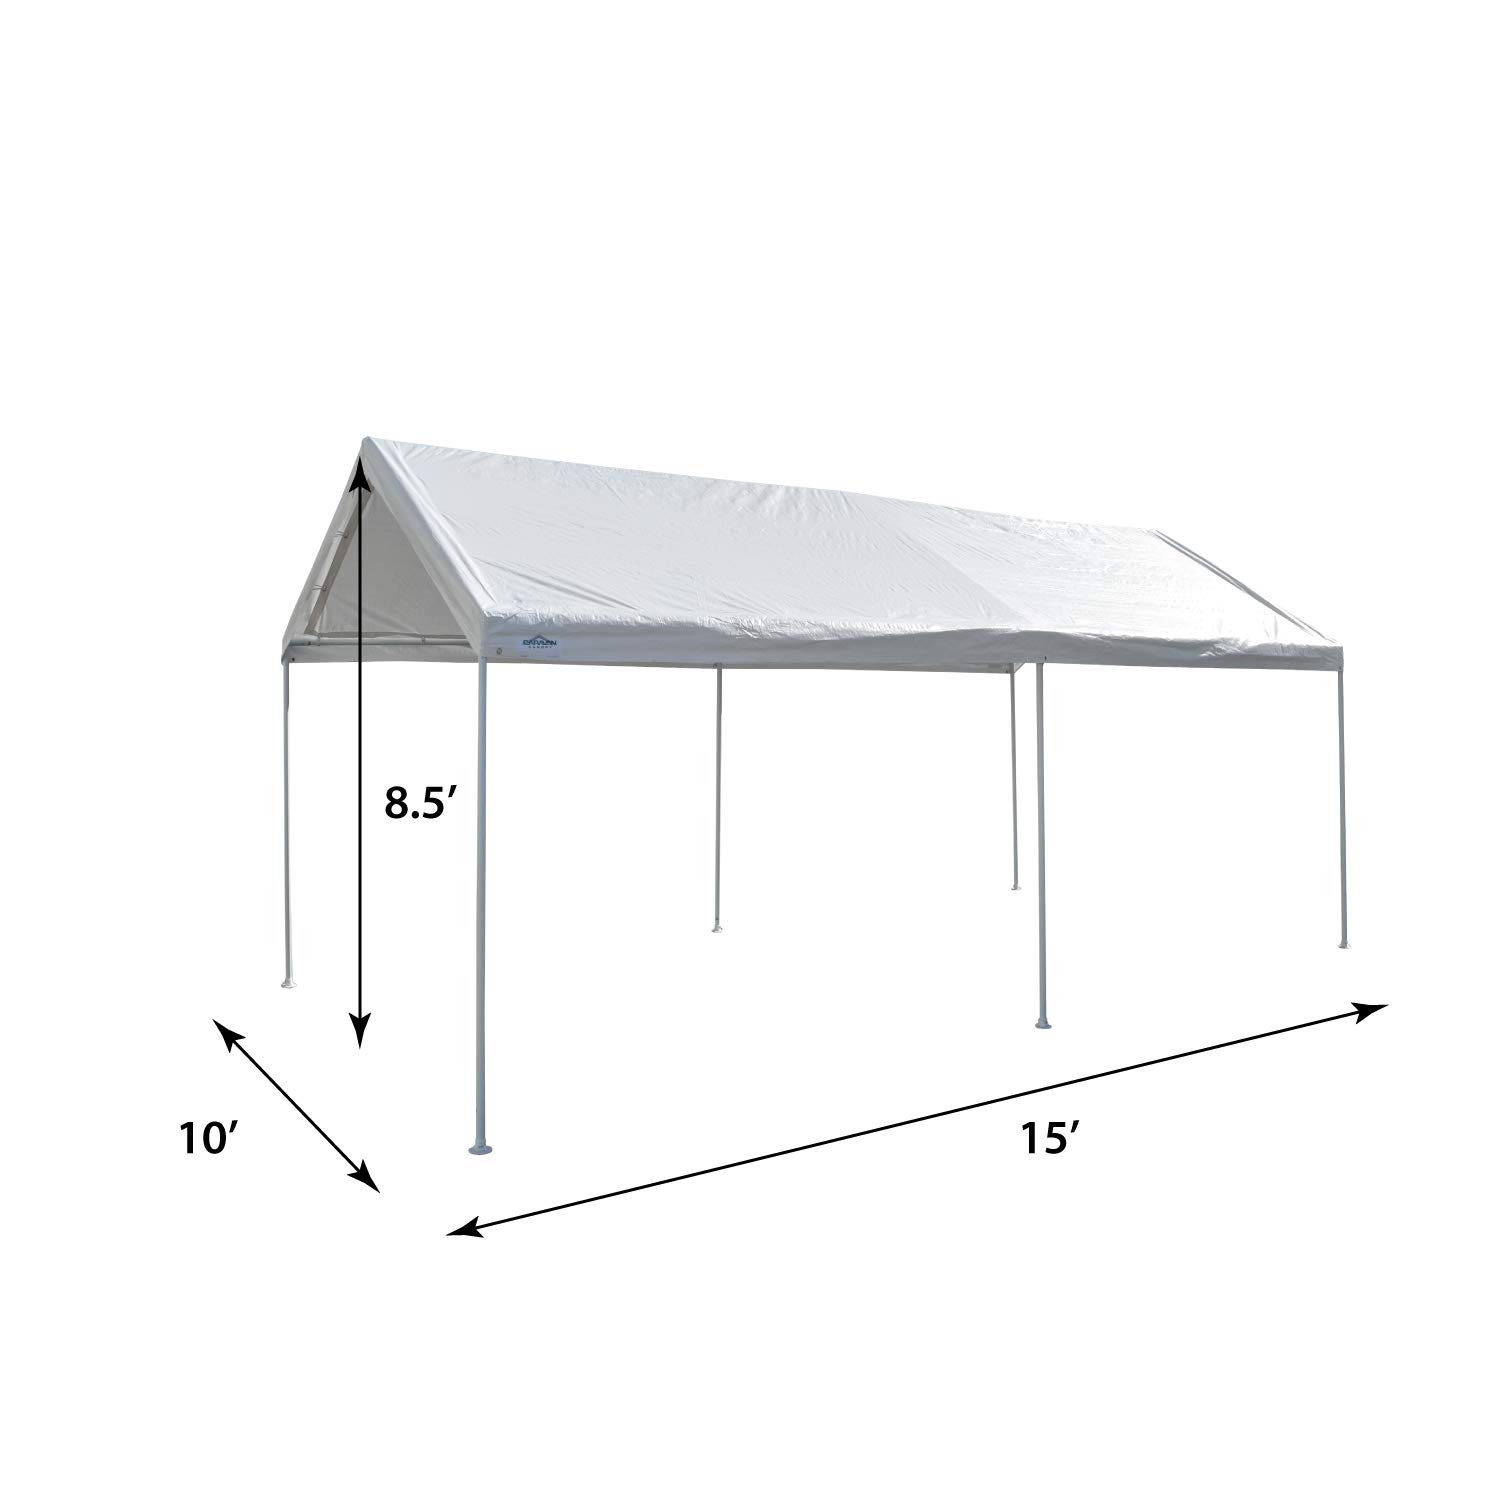 Caravan Canopy Domain Pro 150 10' x 15' Carport Shelter, White